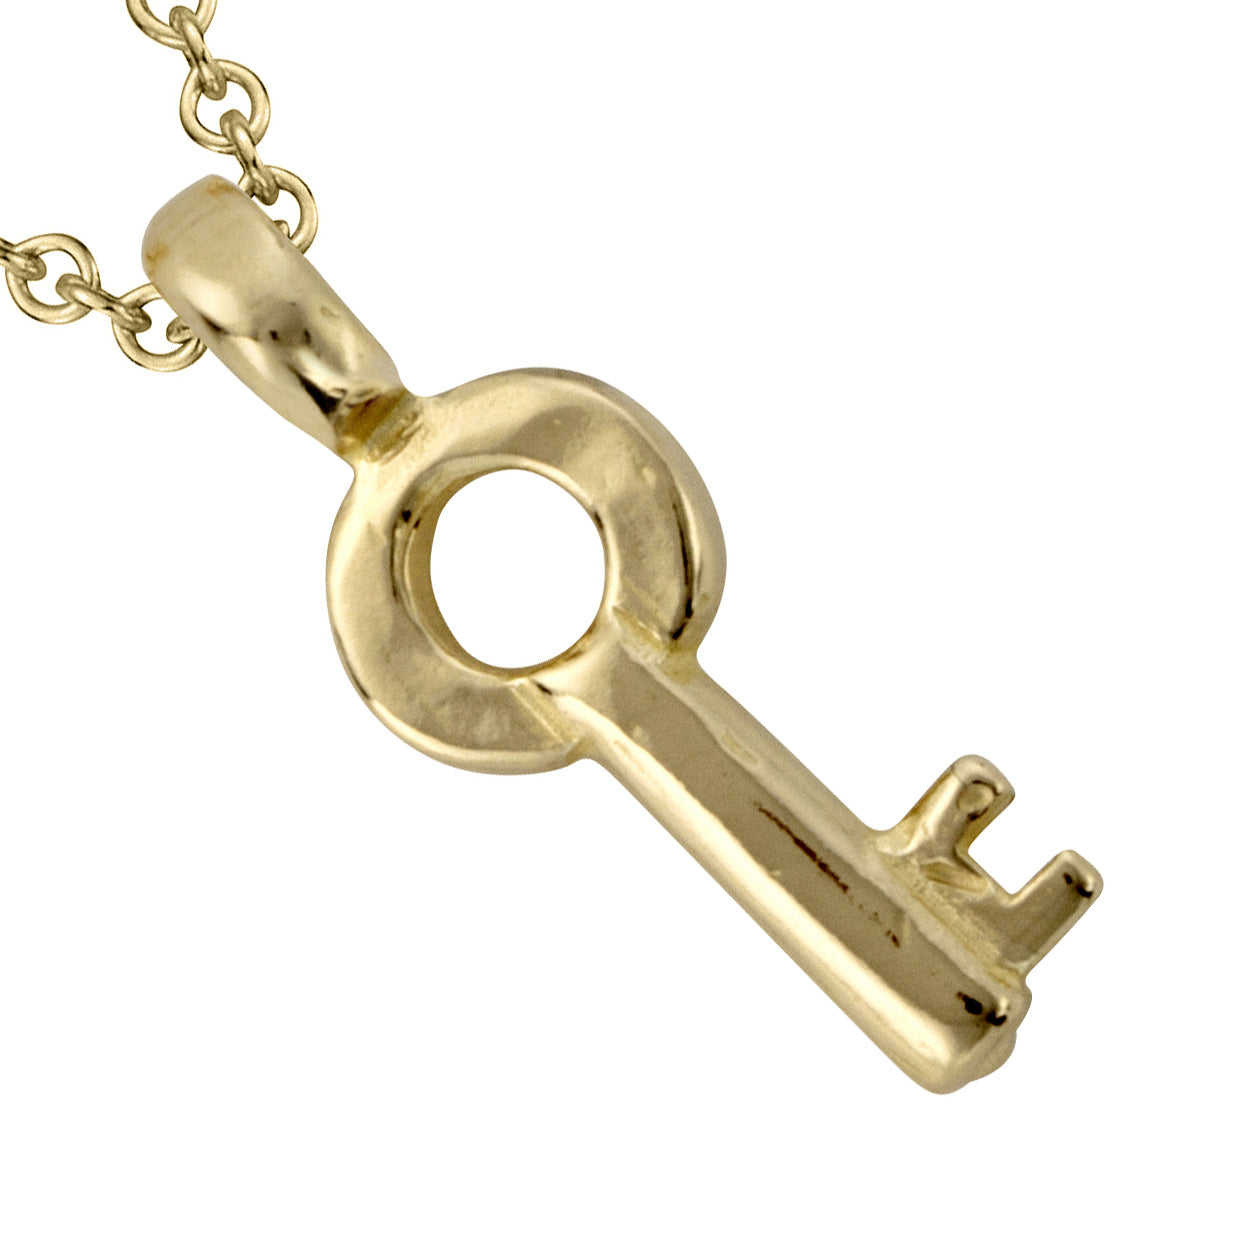 Gold Mini Dreamer's Key Necklace